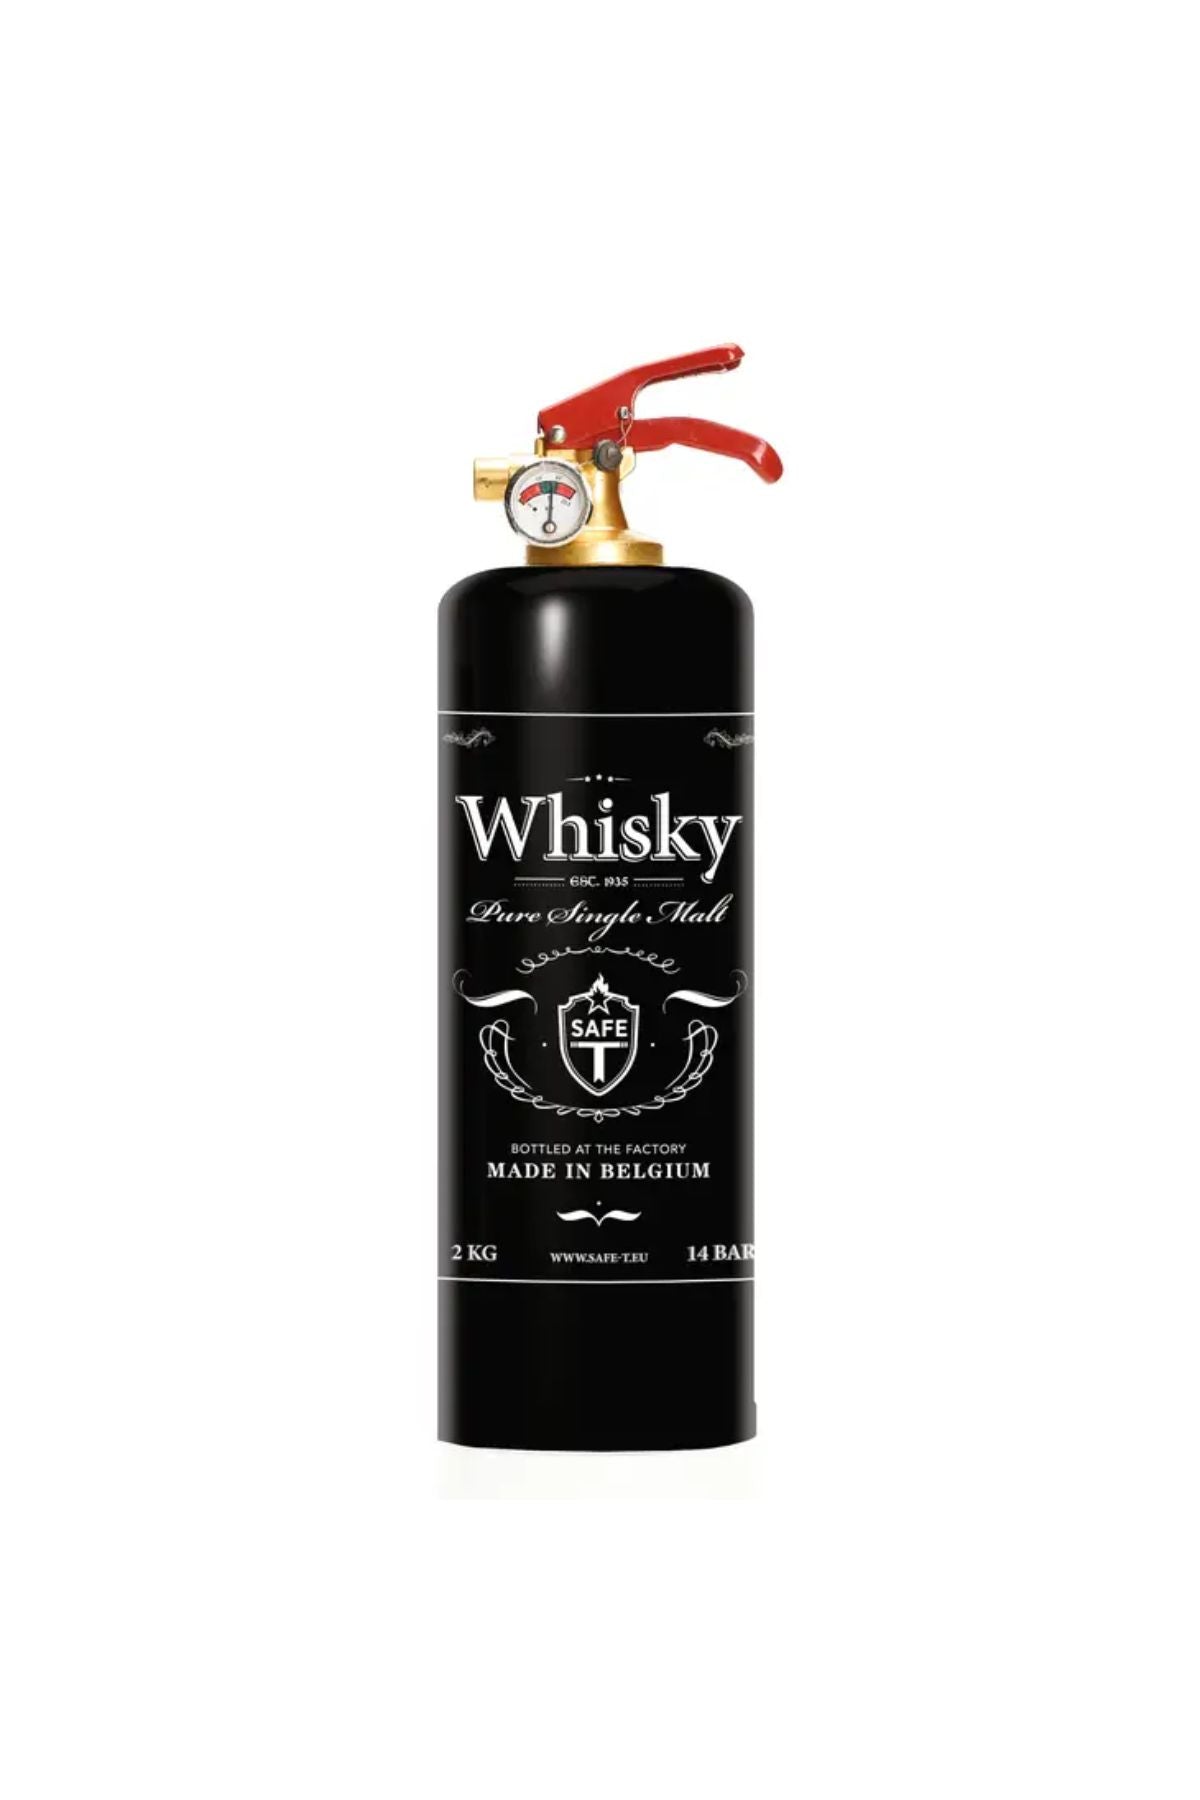 Designer fire extinguisher